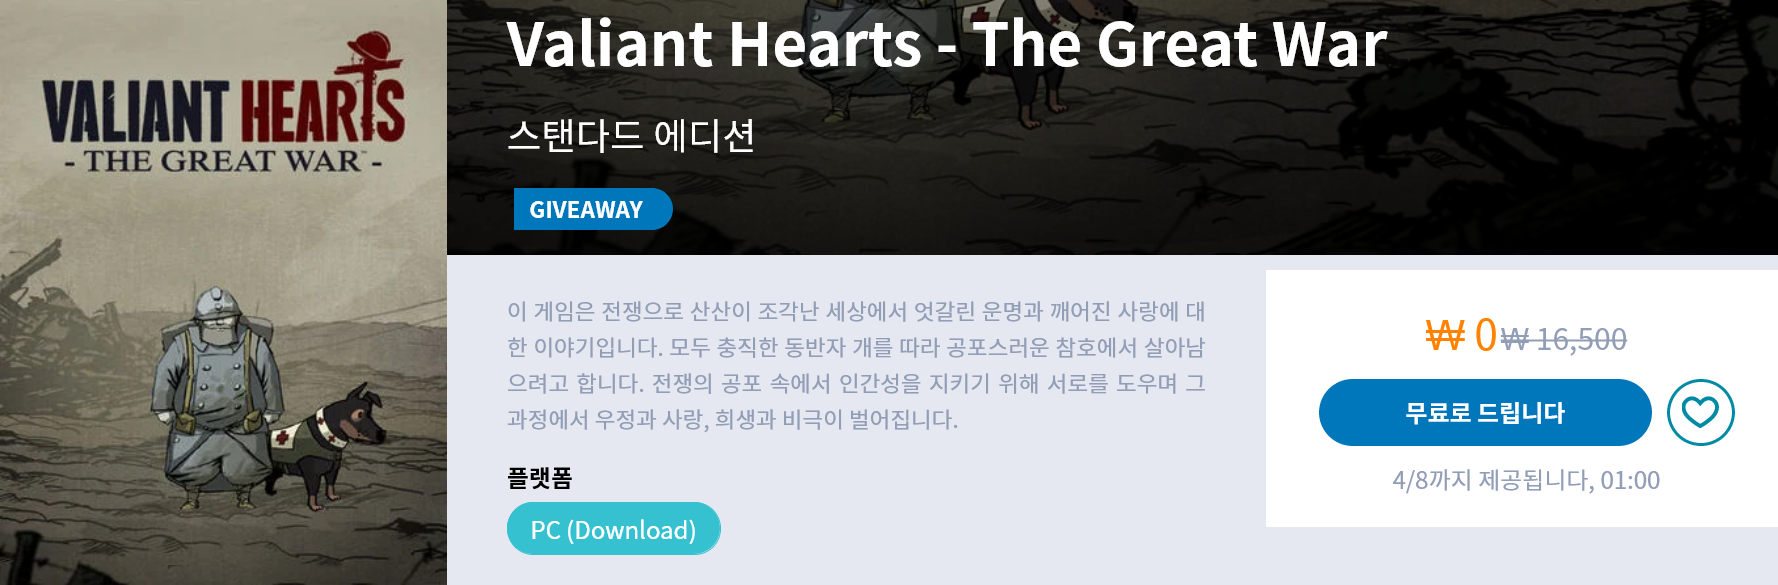 Screenshot_2020-07-31 Valiant Hearts - the Great War.png